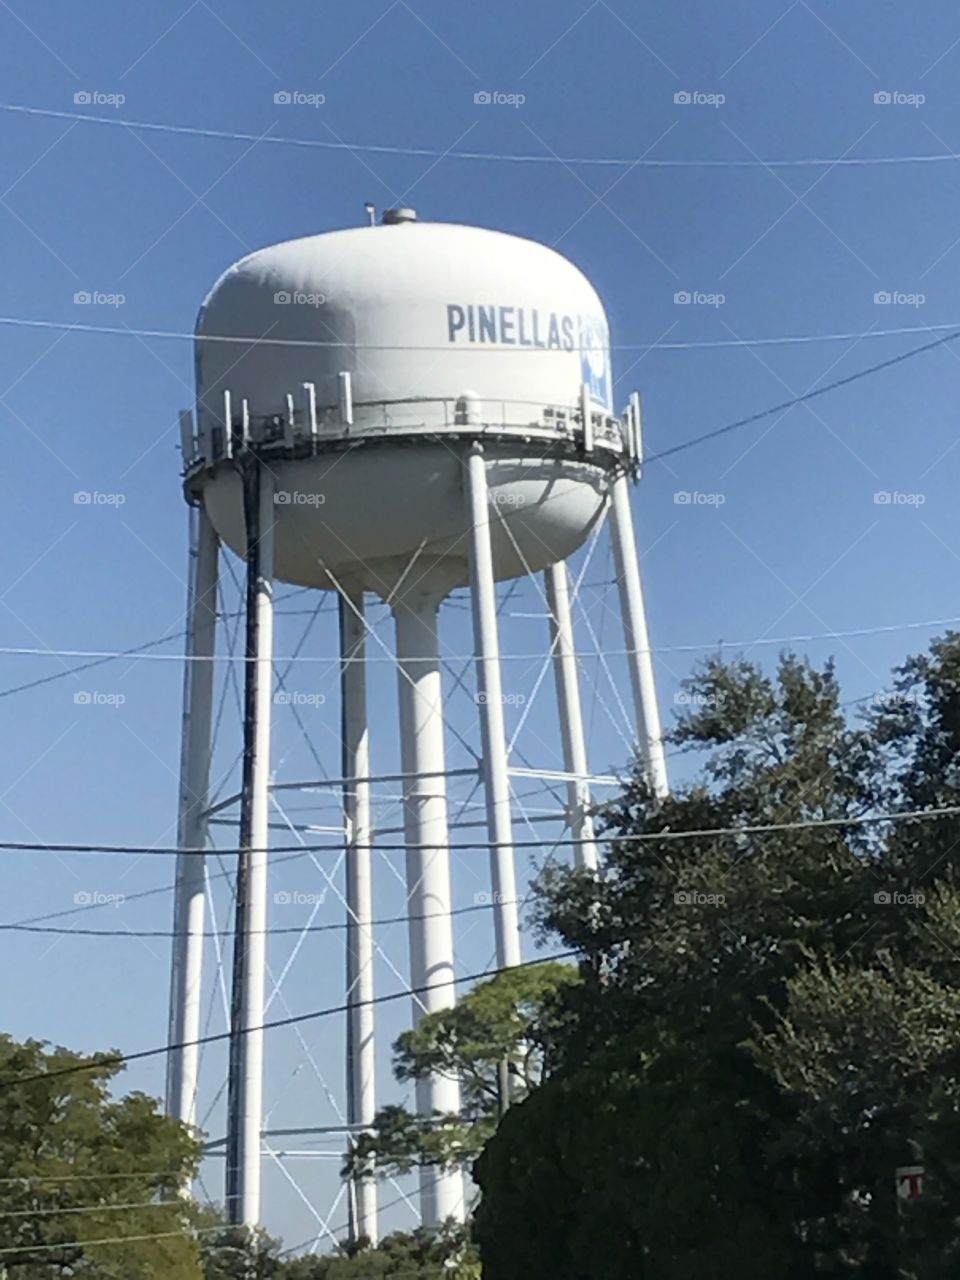 Pinellas County (Pinellas Park) 
